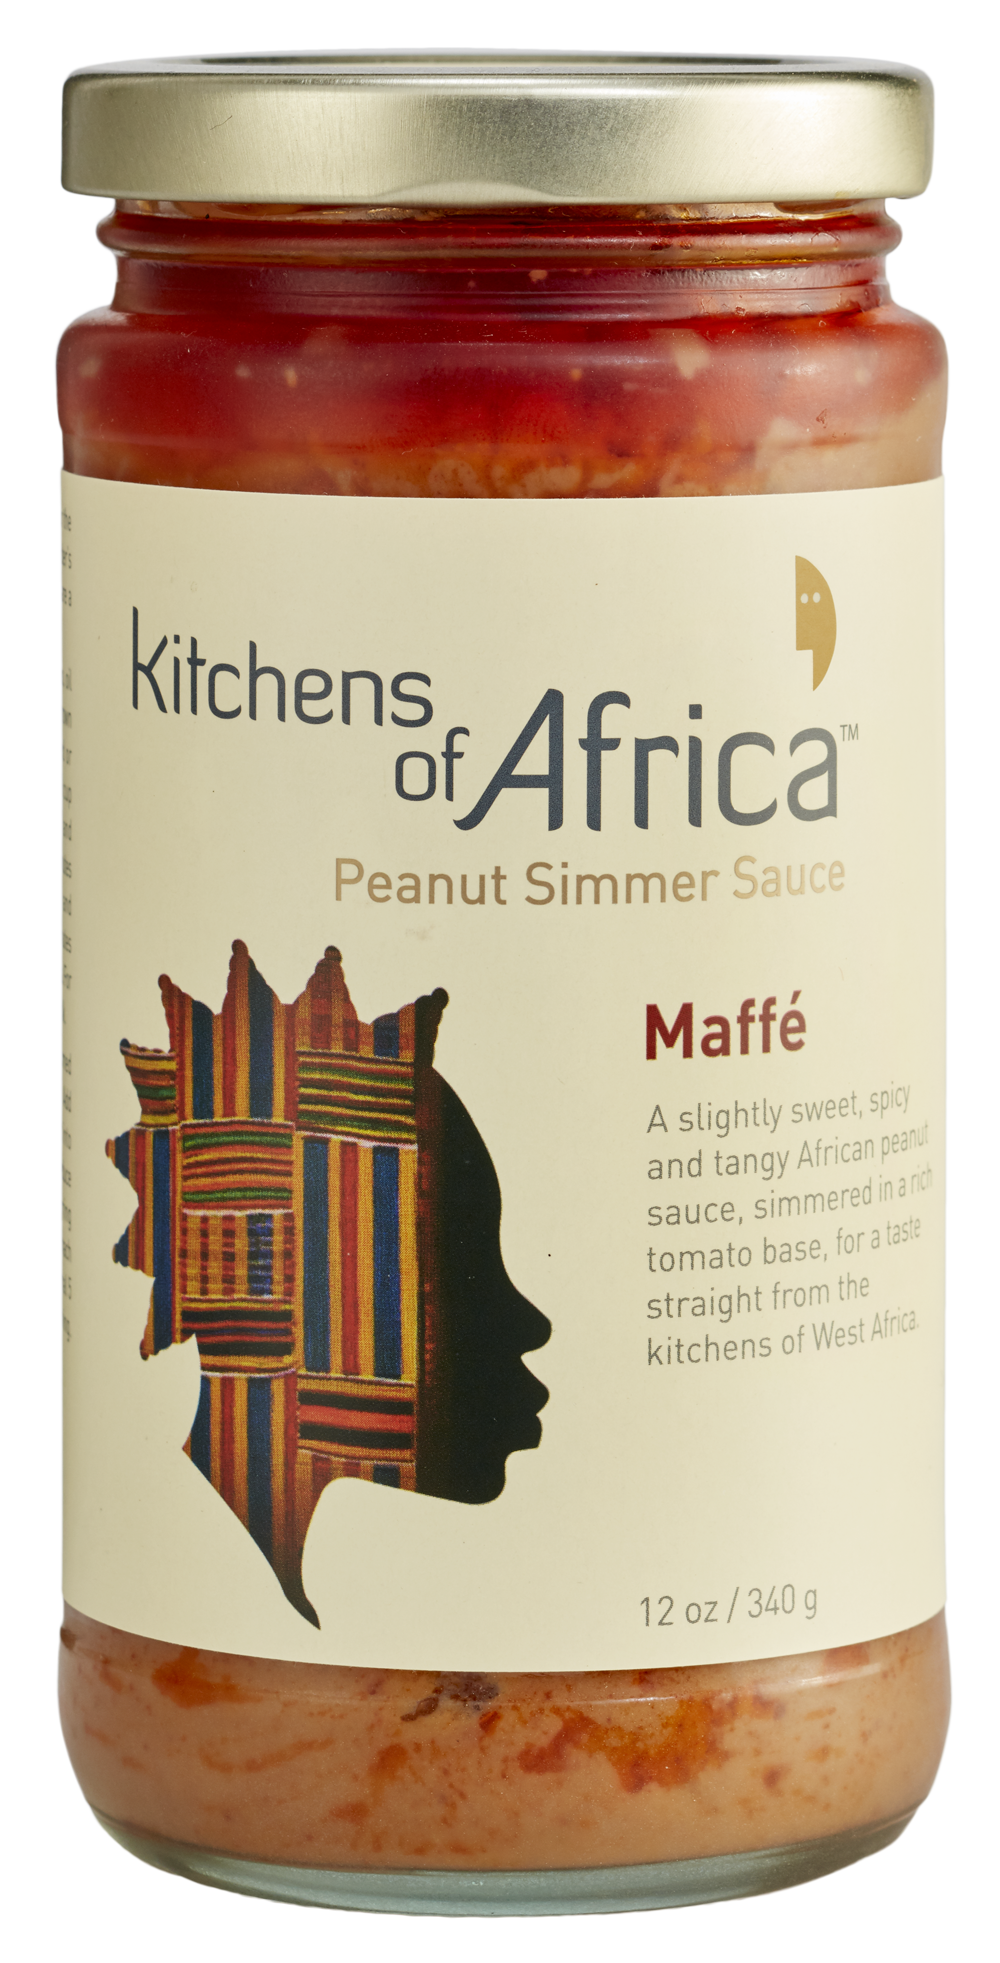 Kitchens of Africa - Maffe - Peanut Simmer Sauce